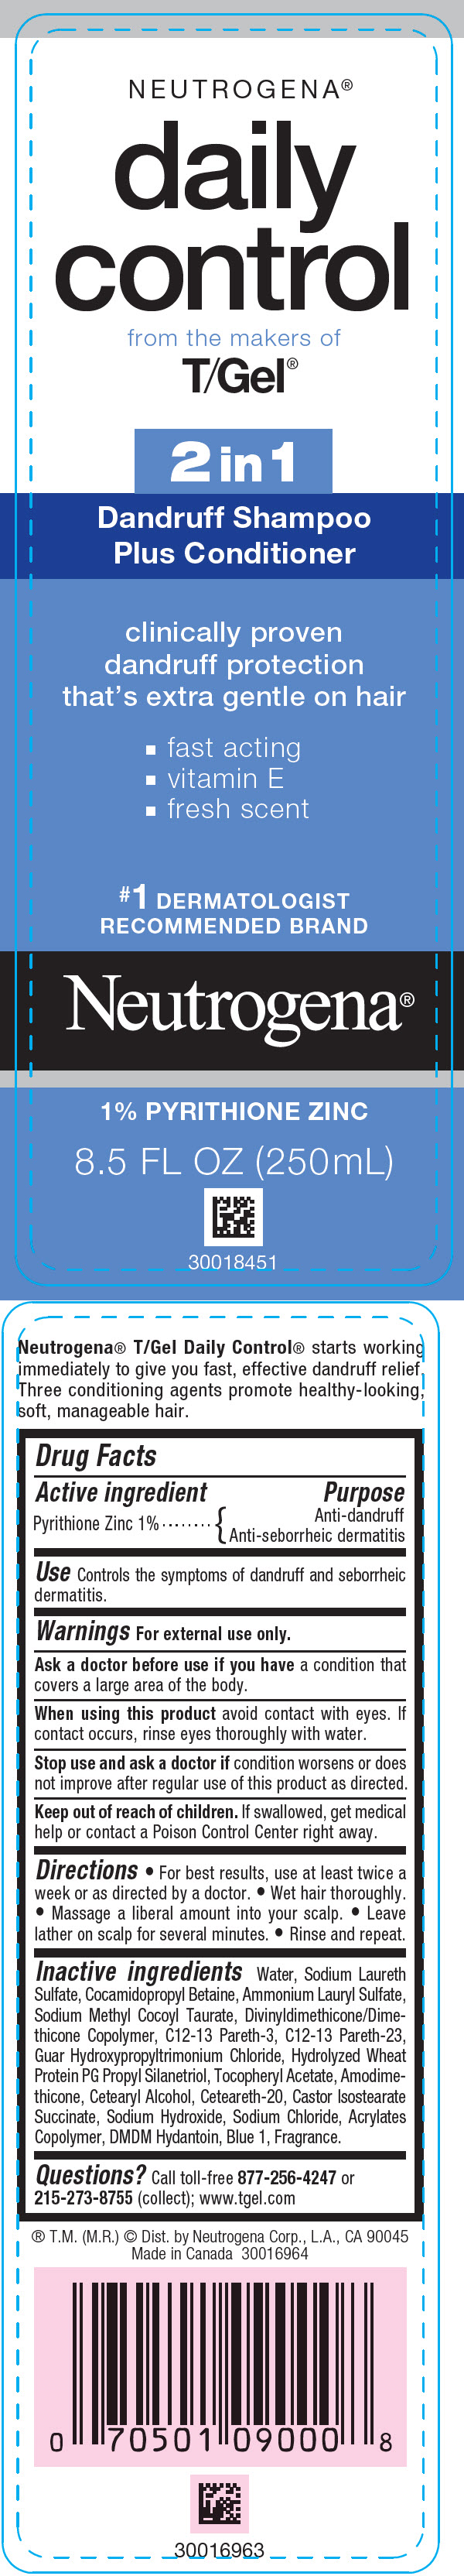 PRINCIPAL DISPLAY PANEL - 250 mL Bottle Label